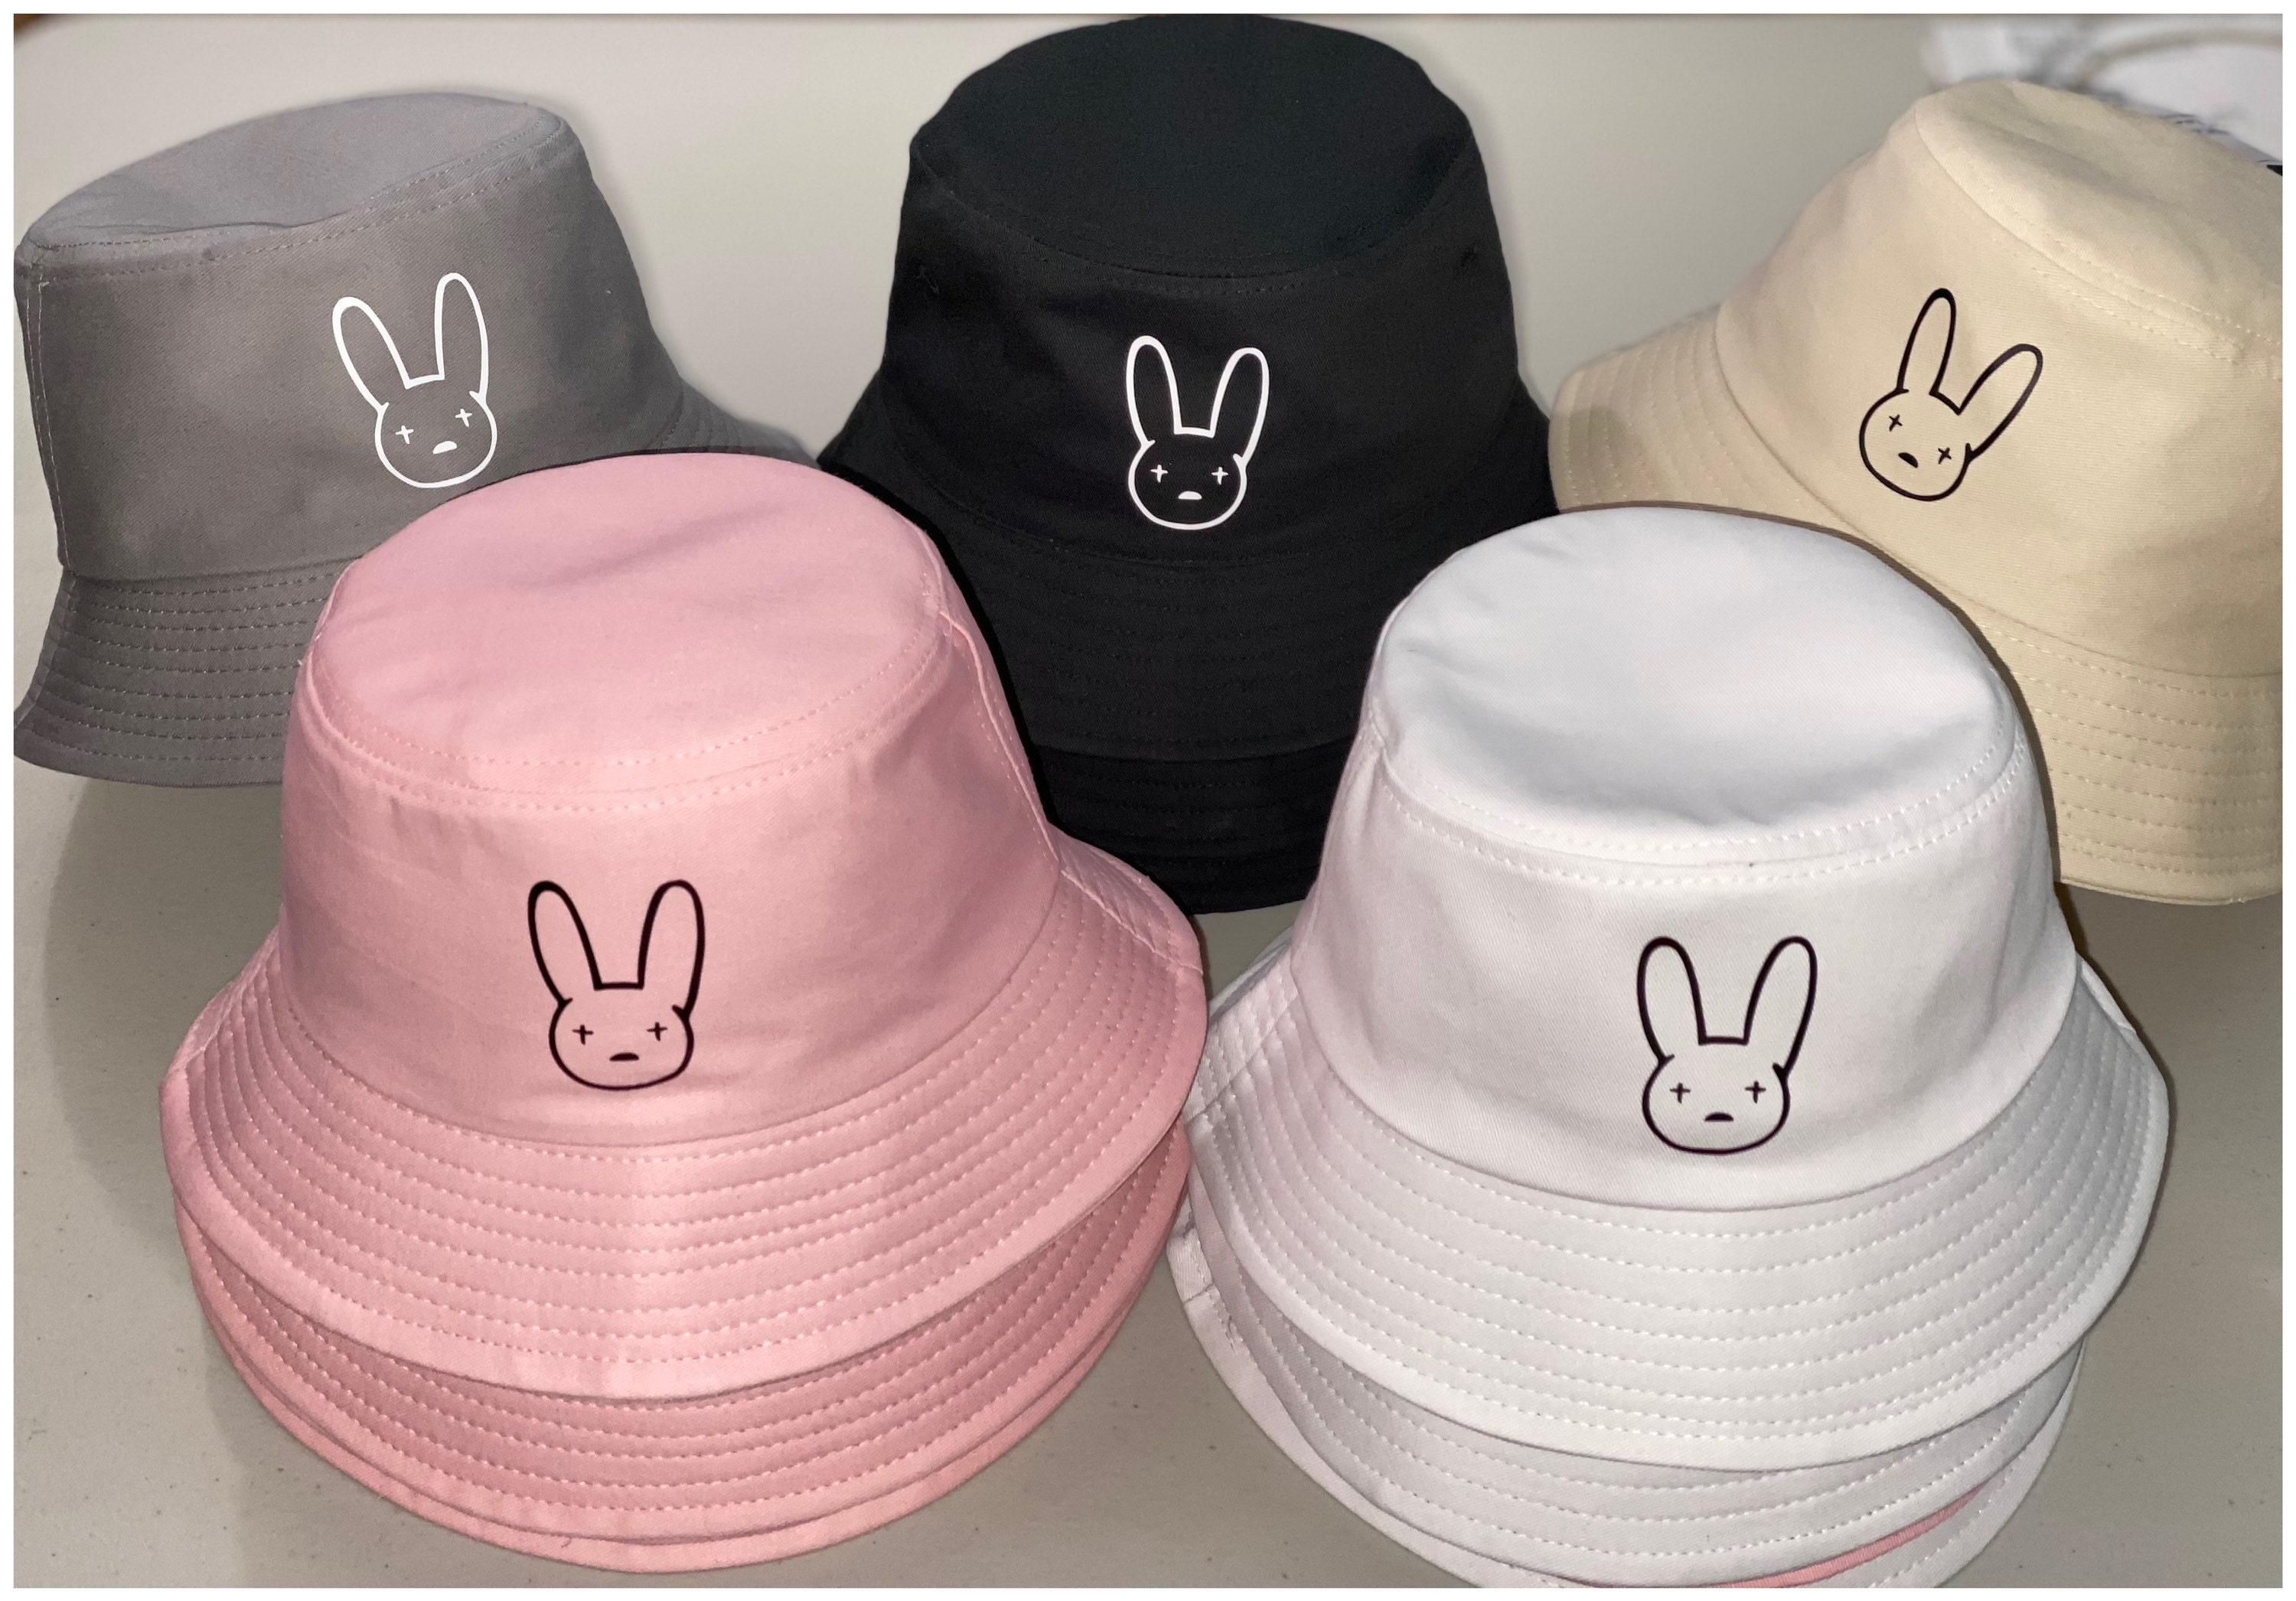 Multicolor Bad Bunny Bucket Hats, Stylish Bad Bunny Reflective Hats, Bad Bunny Shirt Merch, Birthday Gift, Concert Fit, Un Verano Sin Ti